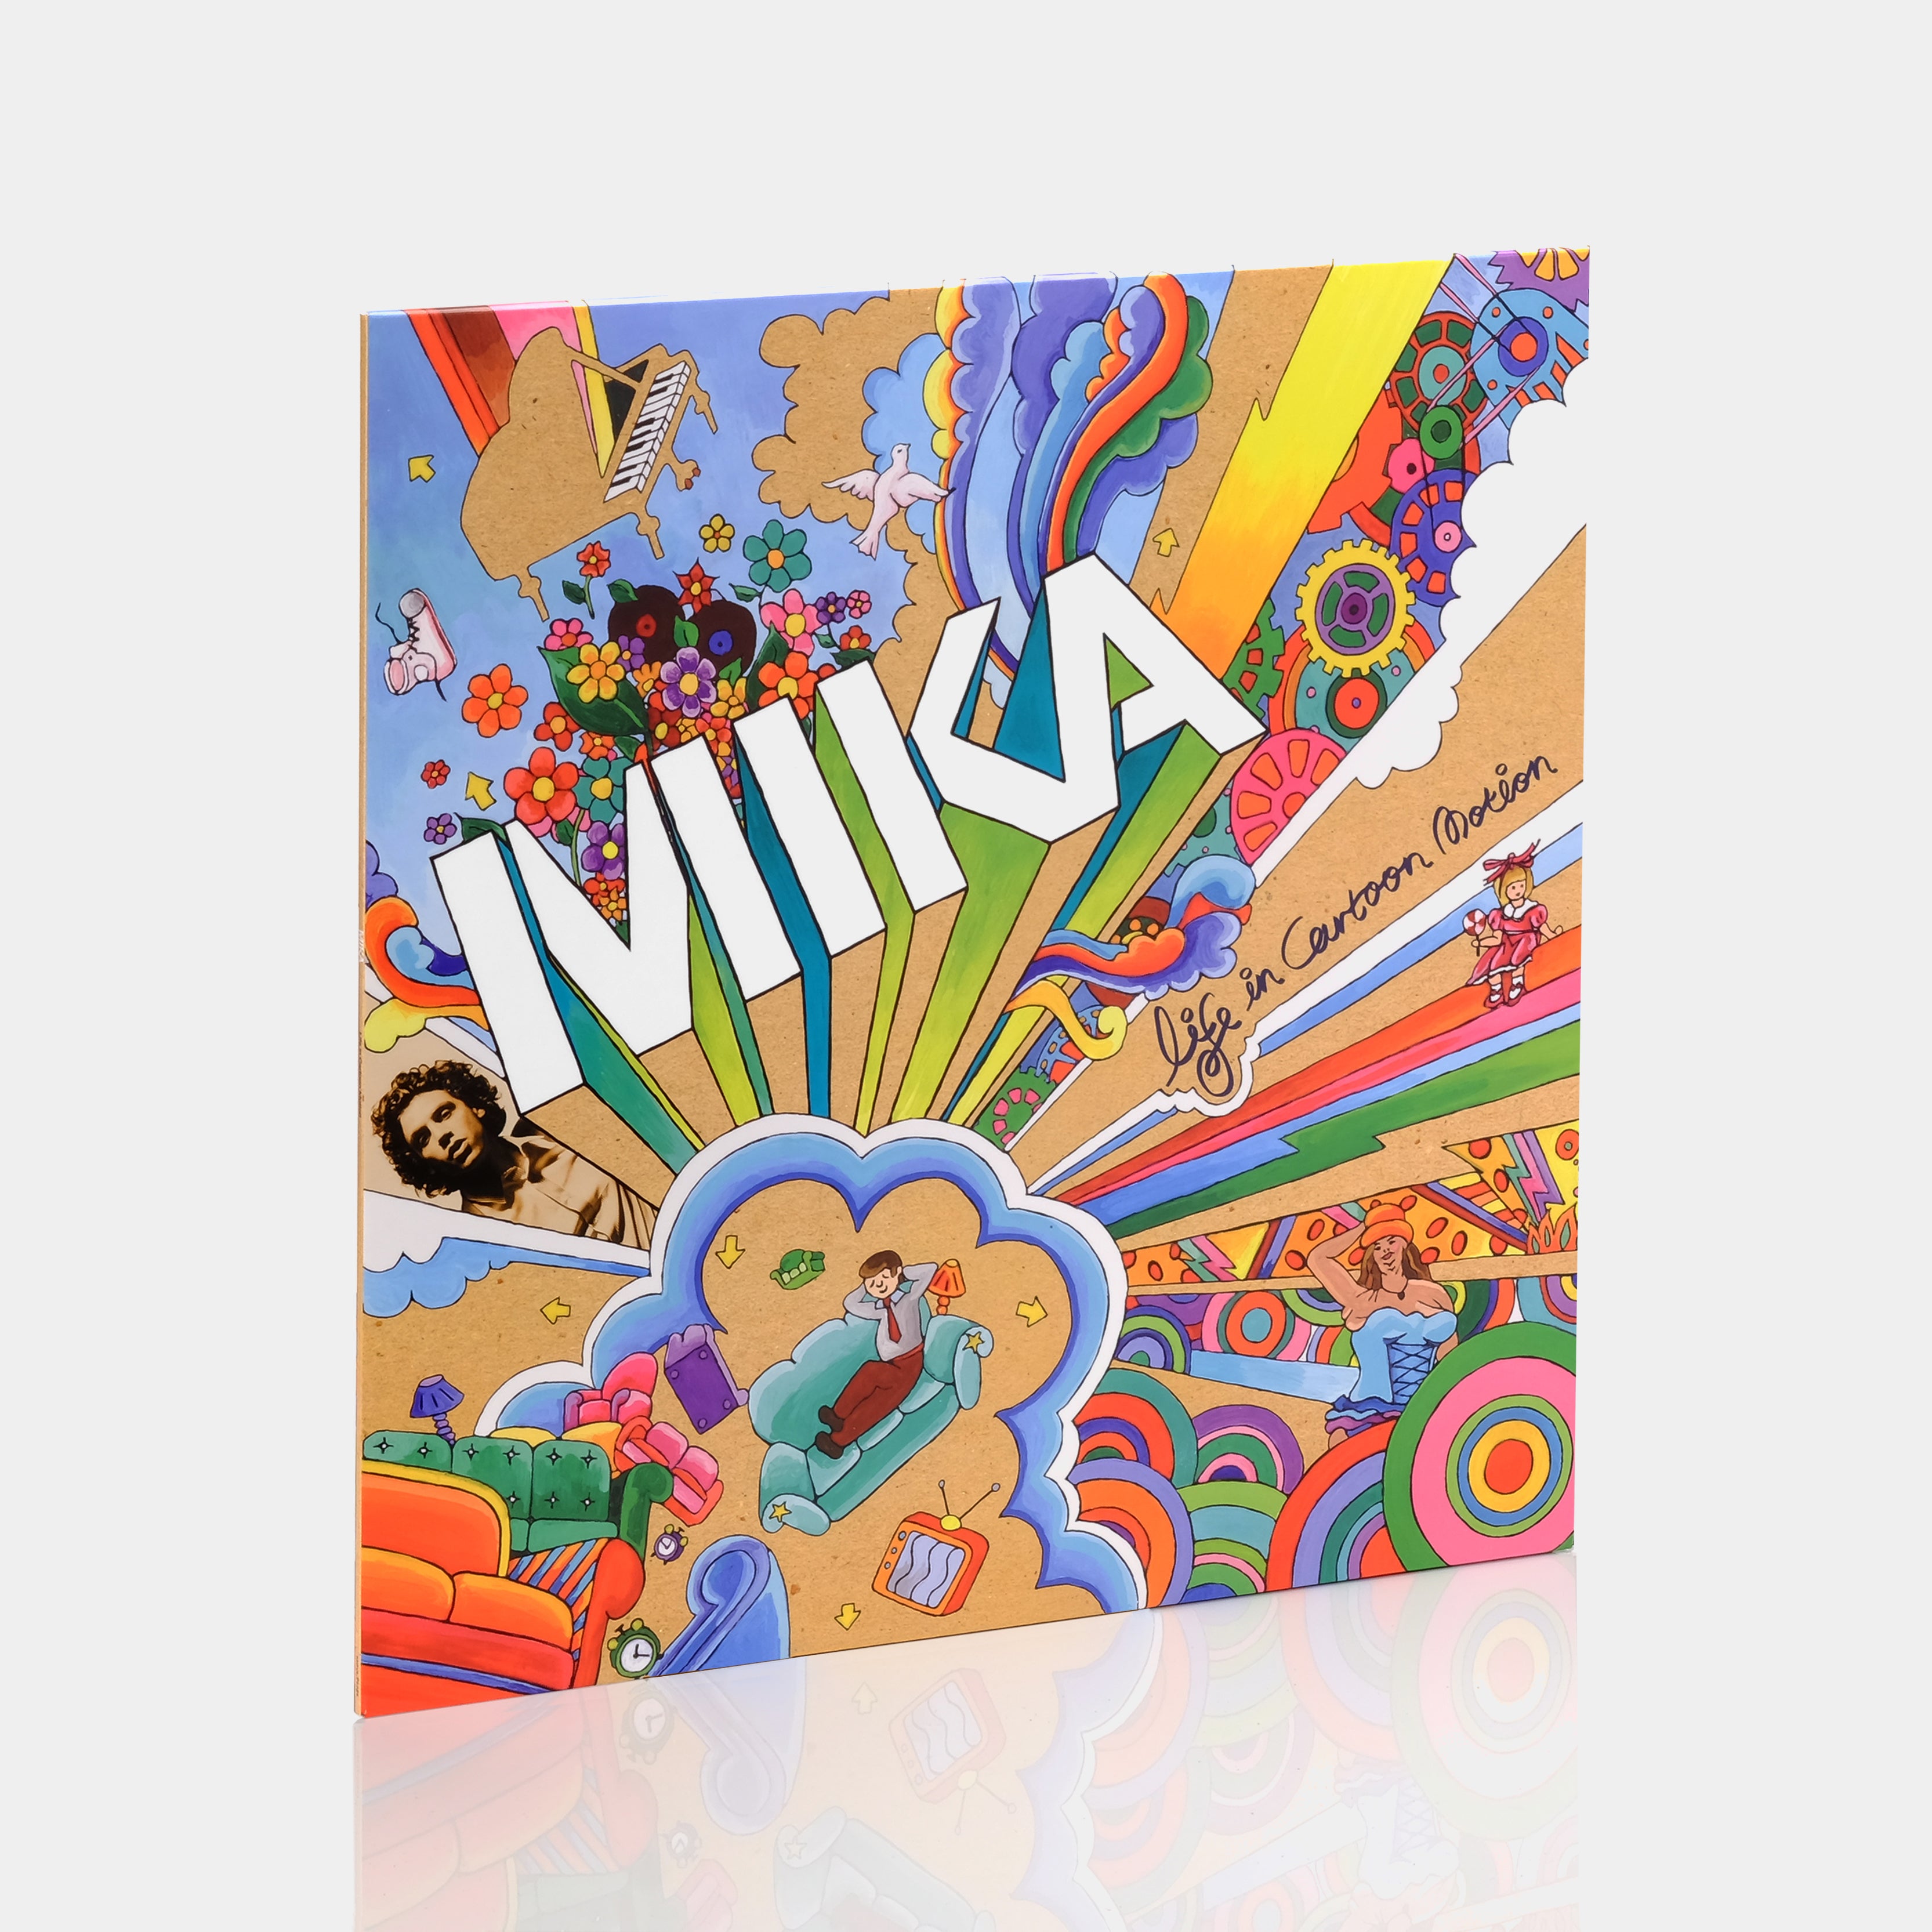 MIKA - LIFE In Cartoon Motion - New Vinyl Record - V11501A $84.30